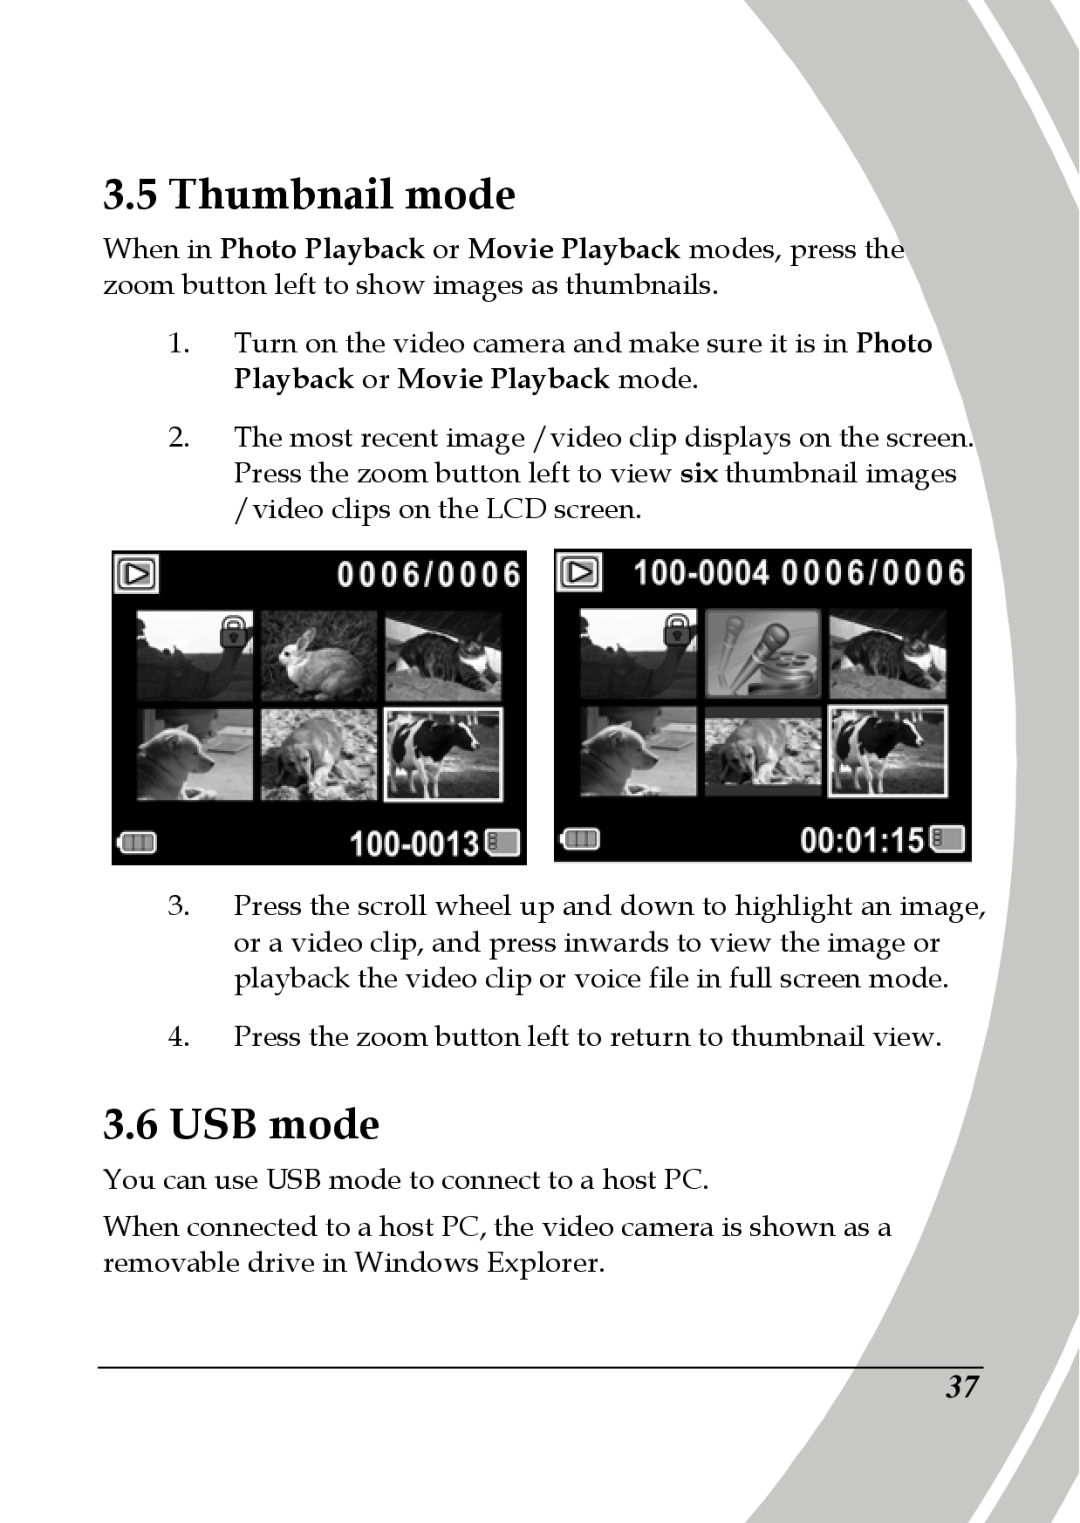 DXG Technology DXG-517V HD manual Thumbnail mode, USB mode 